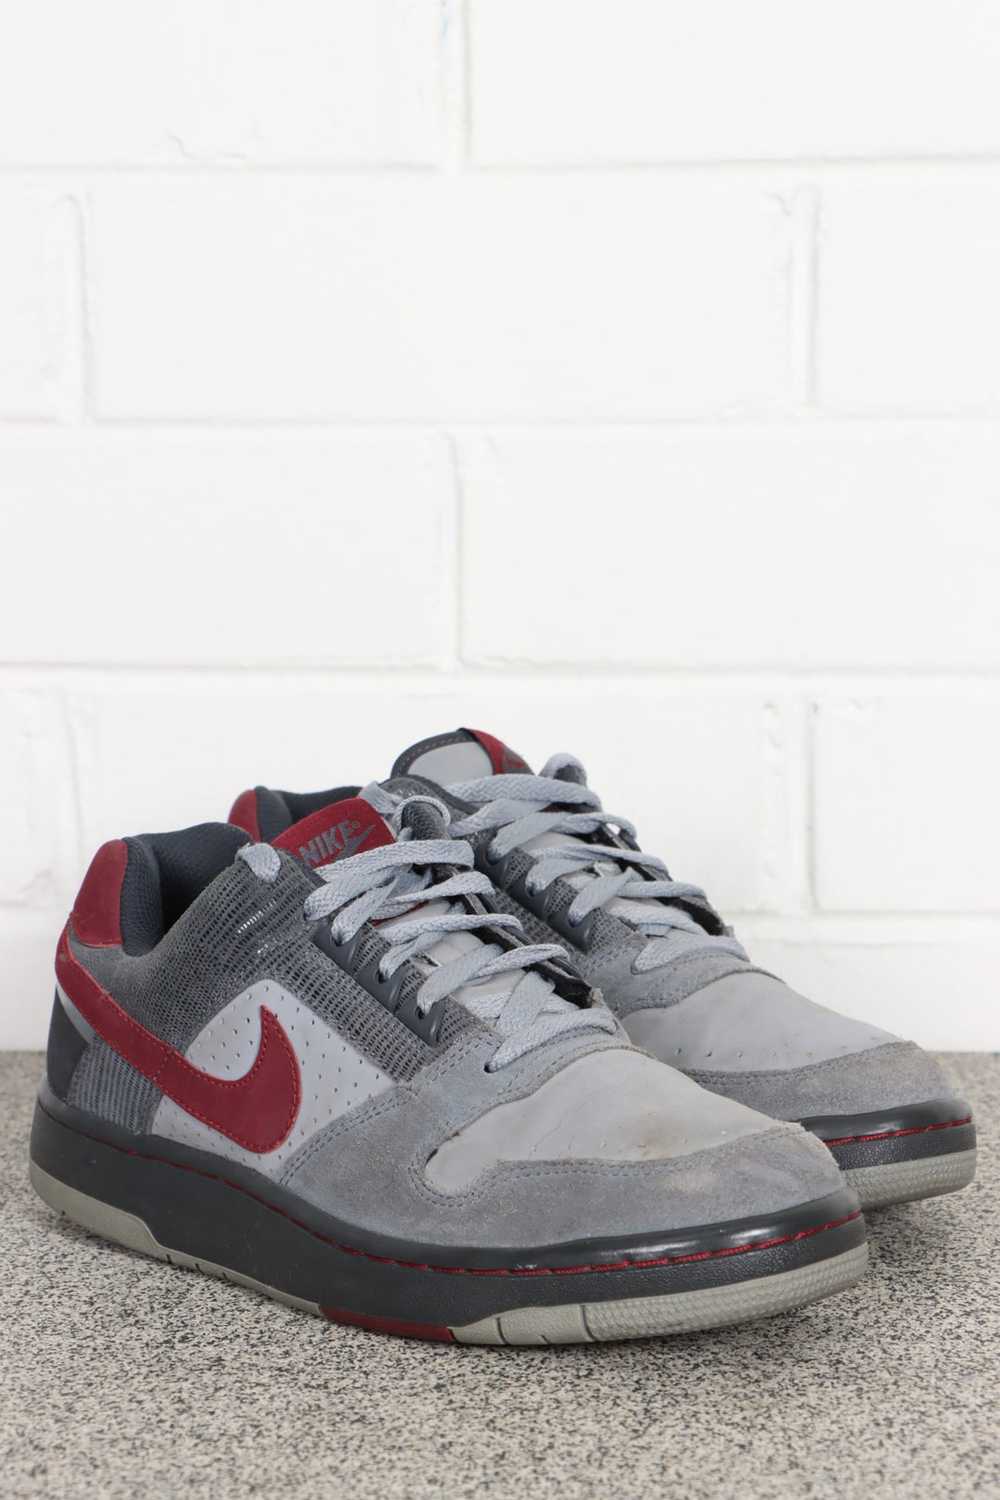 NIKE Delta Force Low Grey/Maroon Sneakers (8.5) - image 1